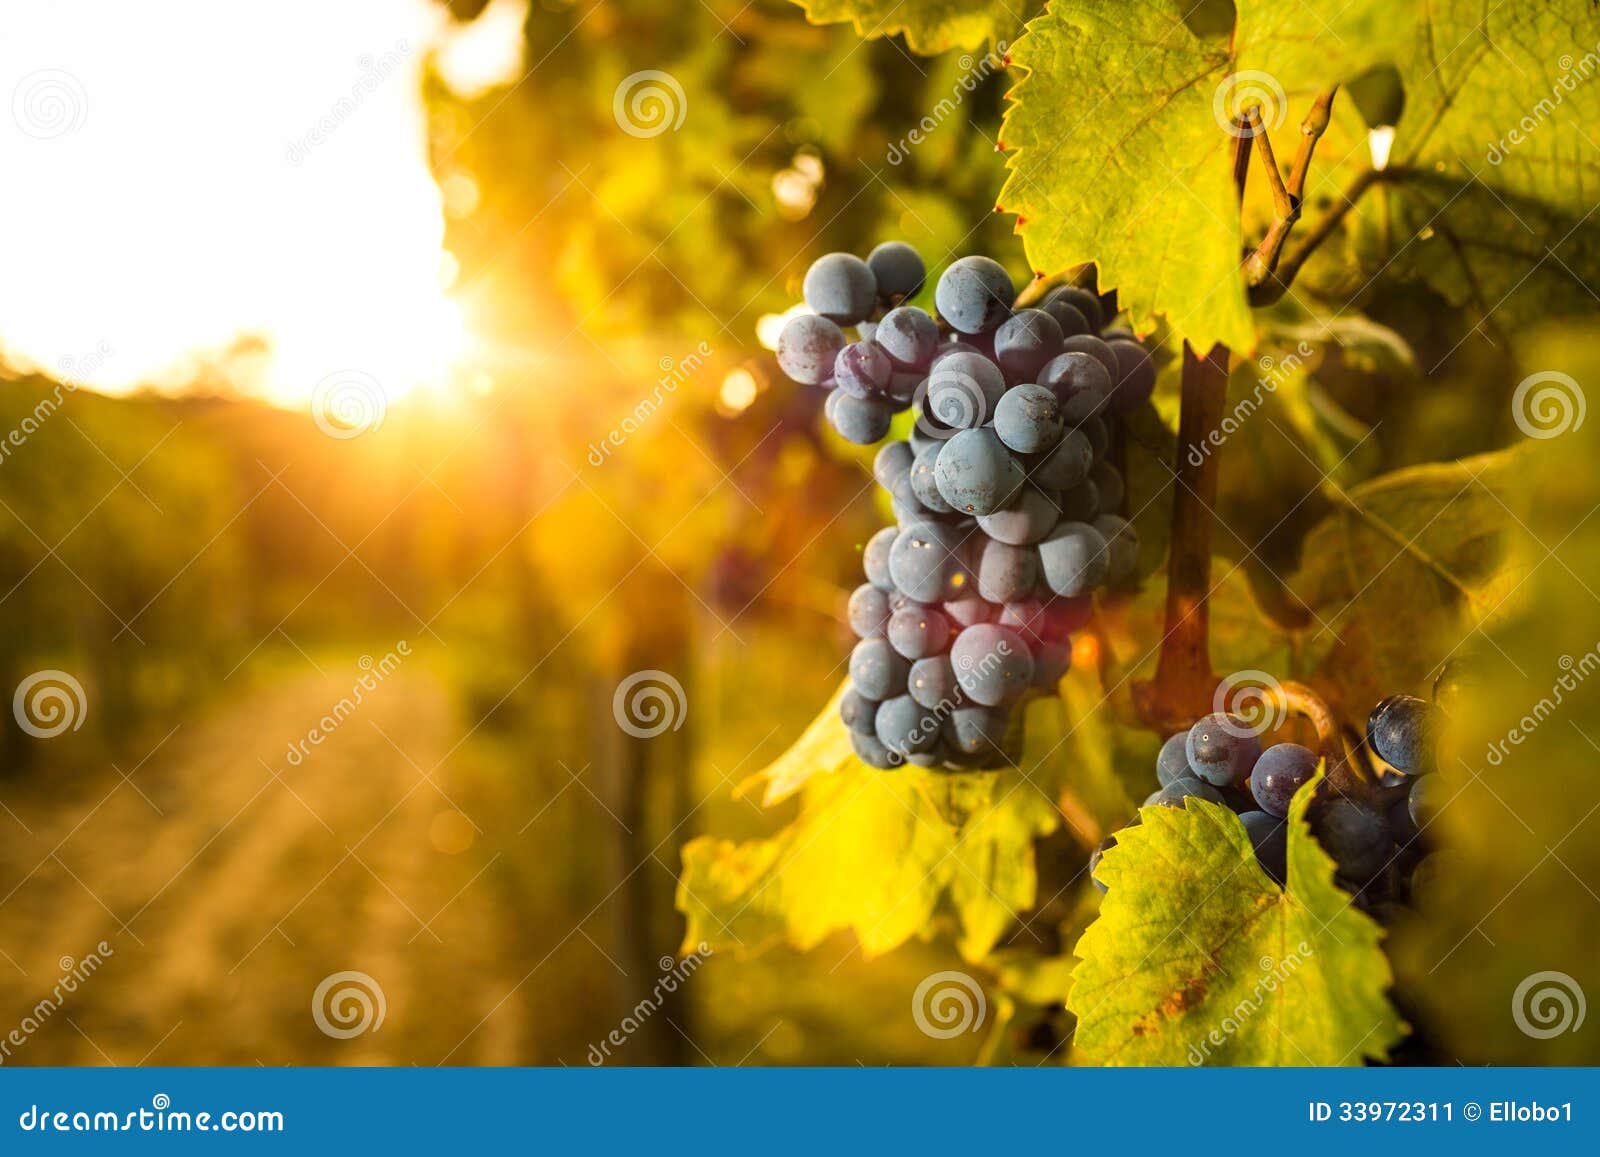 grape in the vineyard.